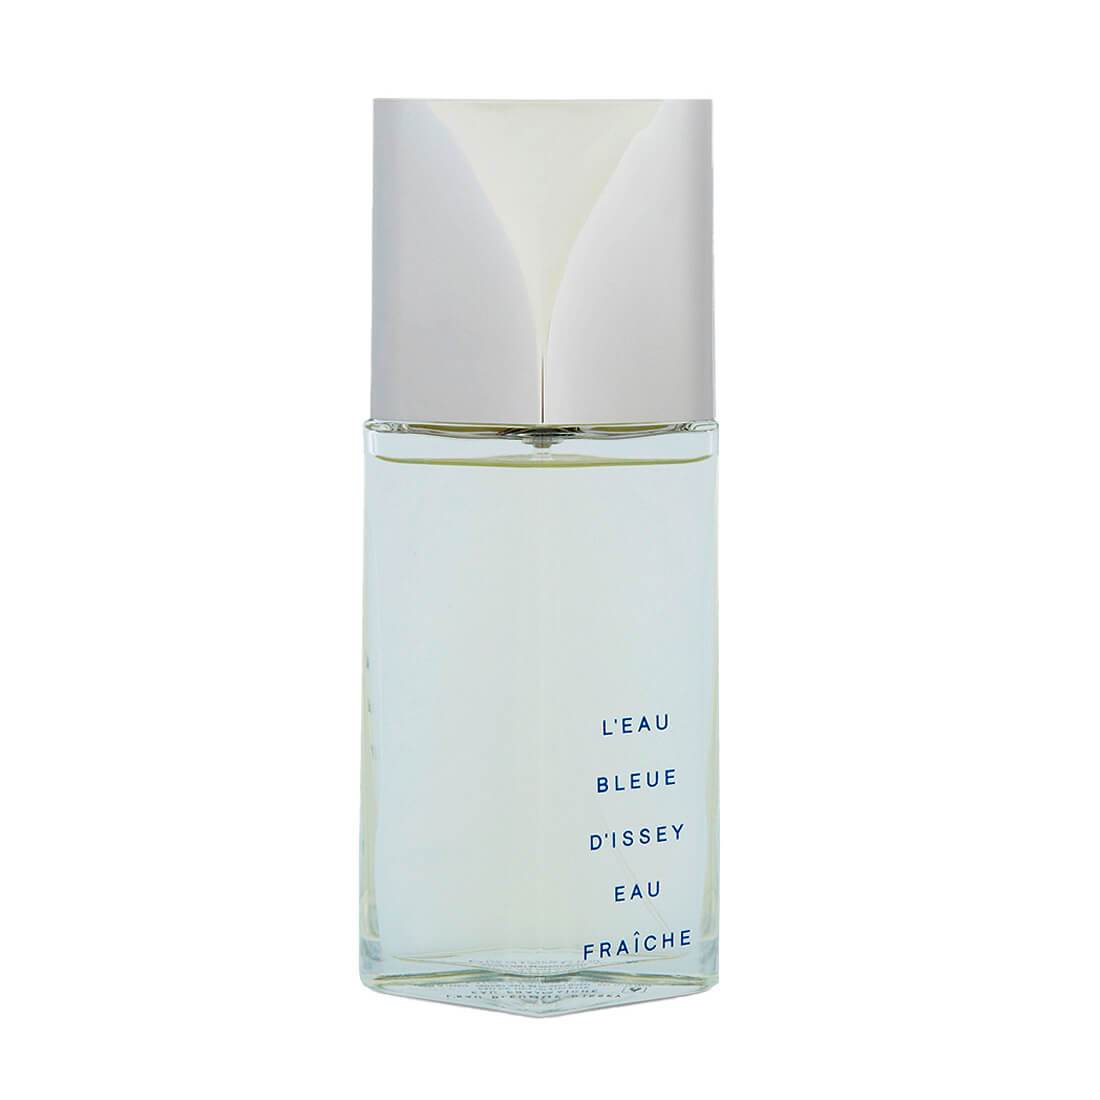 Issey Miyake L Eau Bleue Eau Fraiche EDT Perfume For Men  125ml